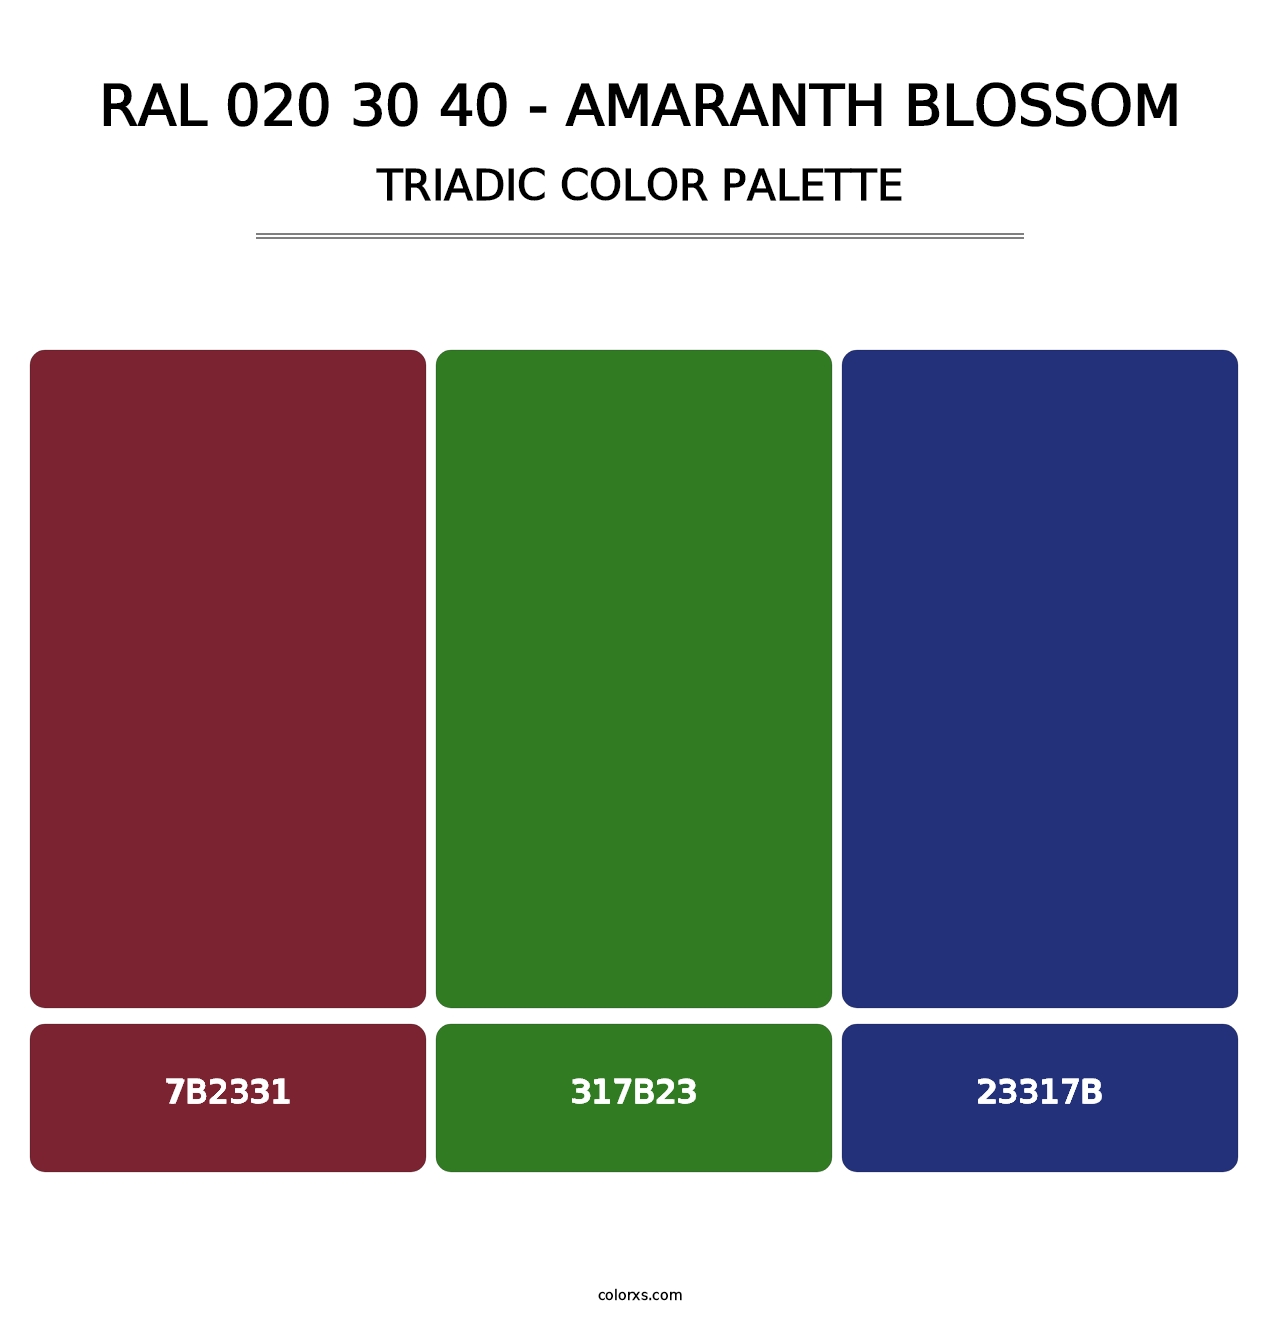 RAL 020 30 40 - Amaranth Blossom - Triadic Color Palette